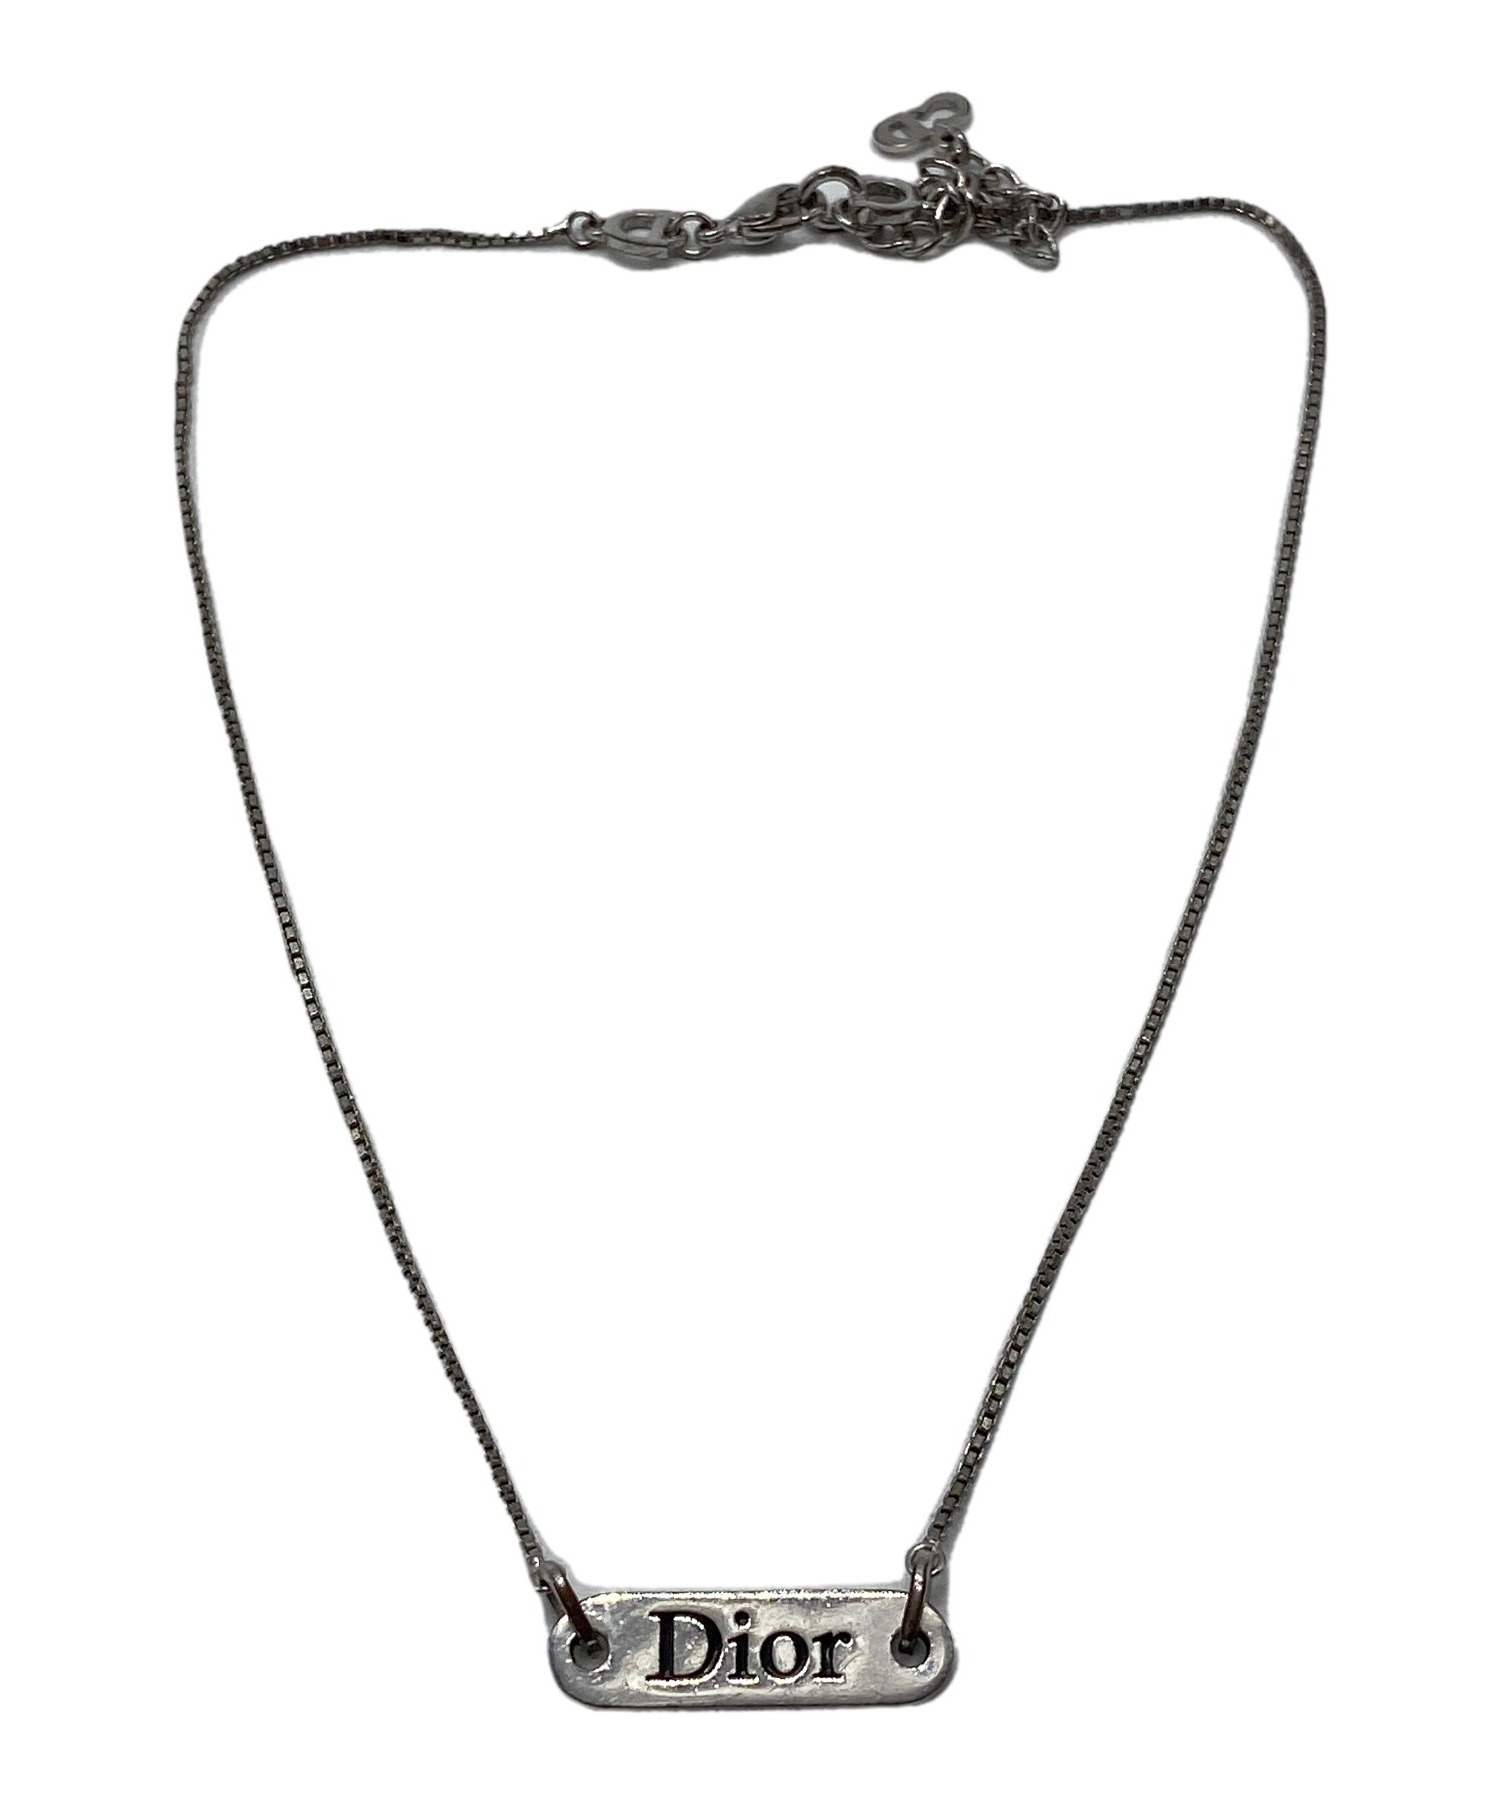 Christian Dior (クリスチャン ディオール) ネックレス サイズ:下記参照